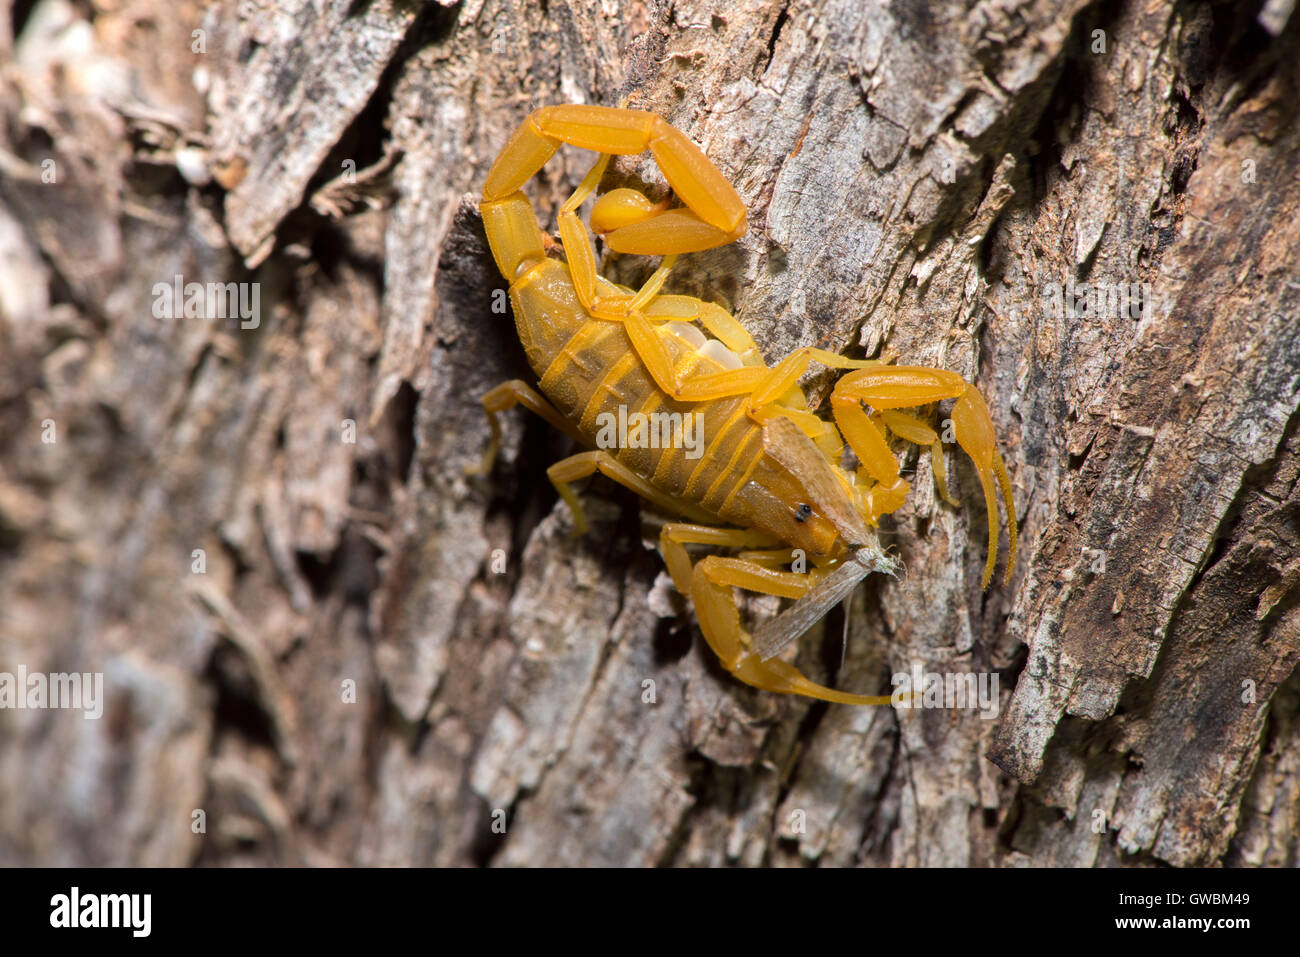 Bark scorpion centruroides exilicauda florence, Arizona, united states 9 septembre 2016 adulte commandant moth. buthi Banque D'Images